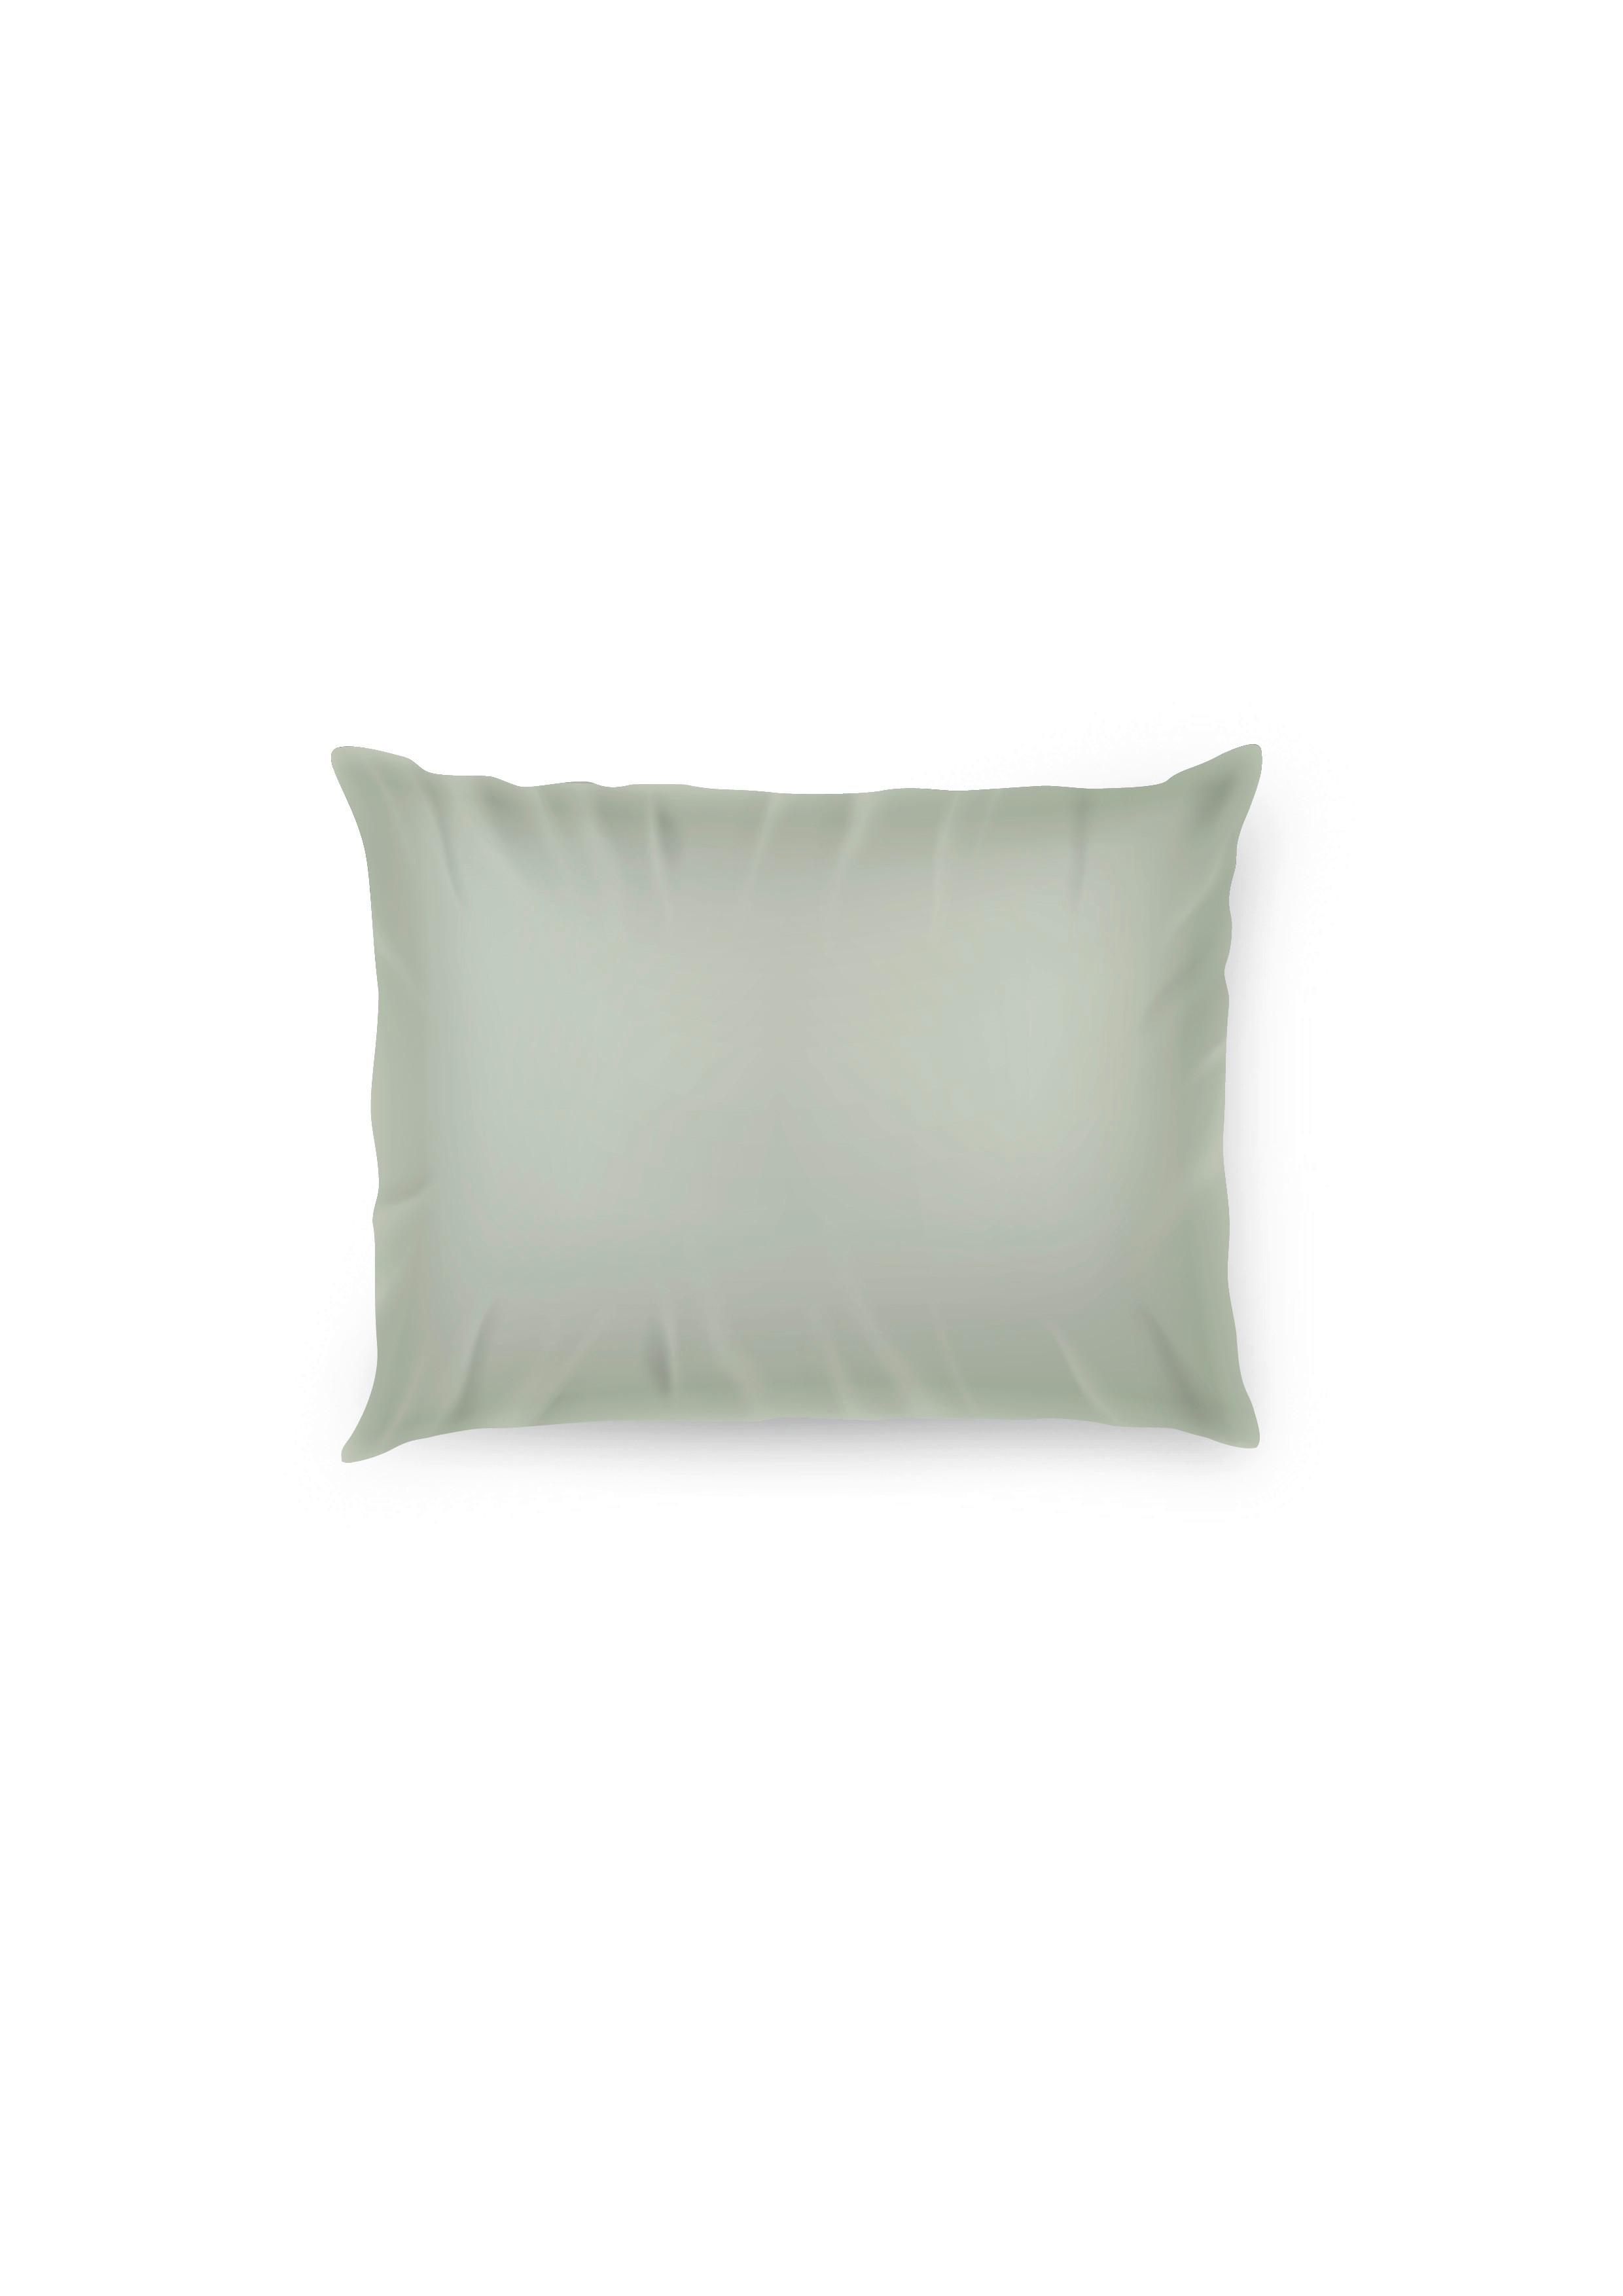 Jastučnica 70/90cm Annika - svijetlo zelena, tekstil (70/90cm) - Modern Living